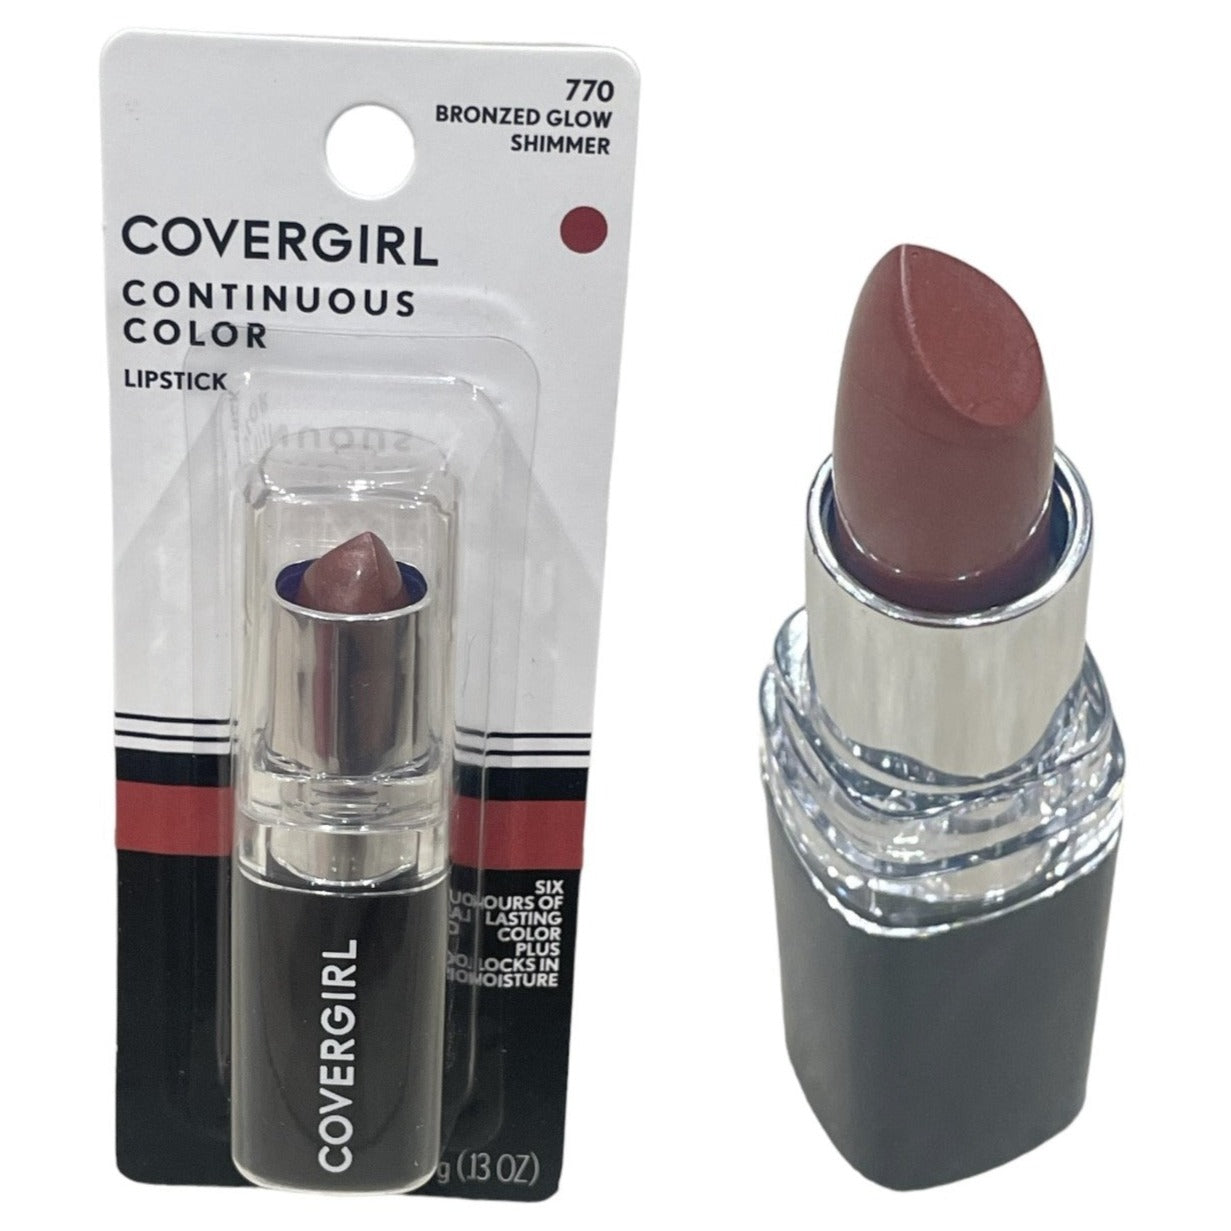 cosmetics liquidations, overstock makeup, wholesale lipsticks